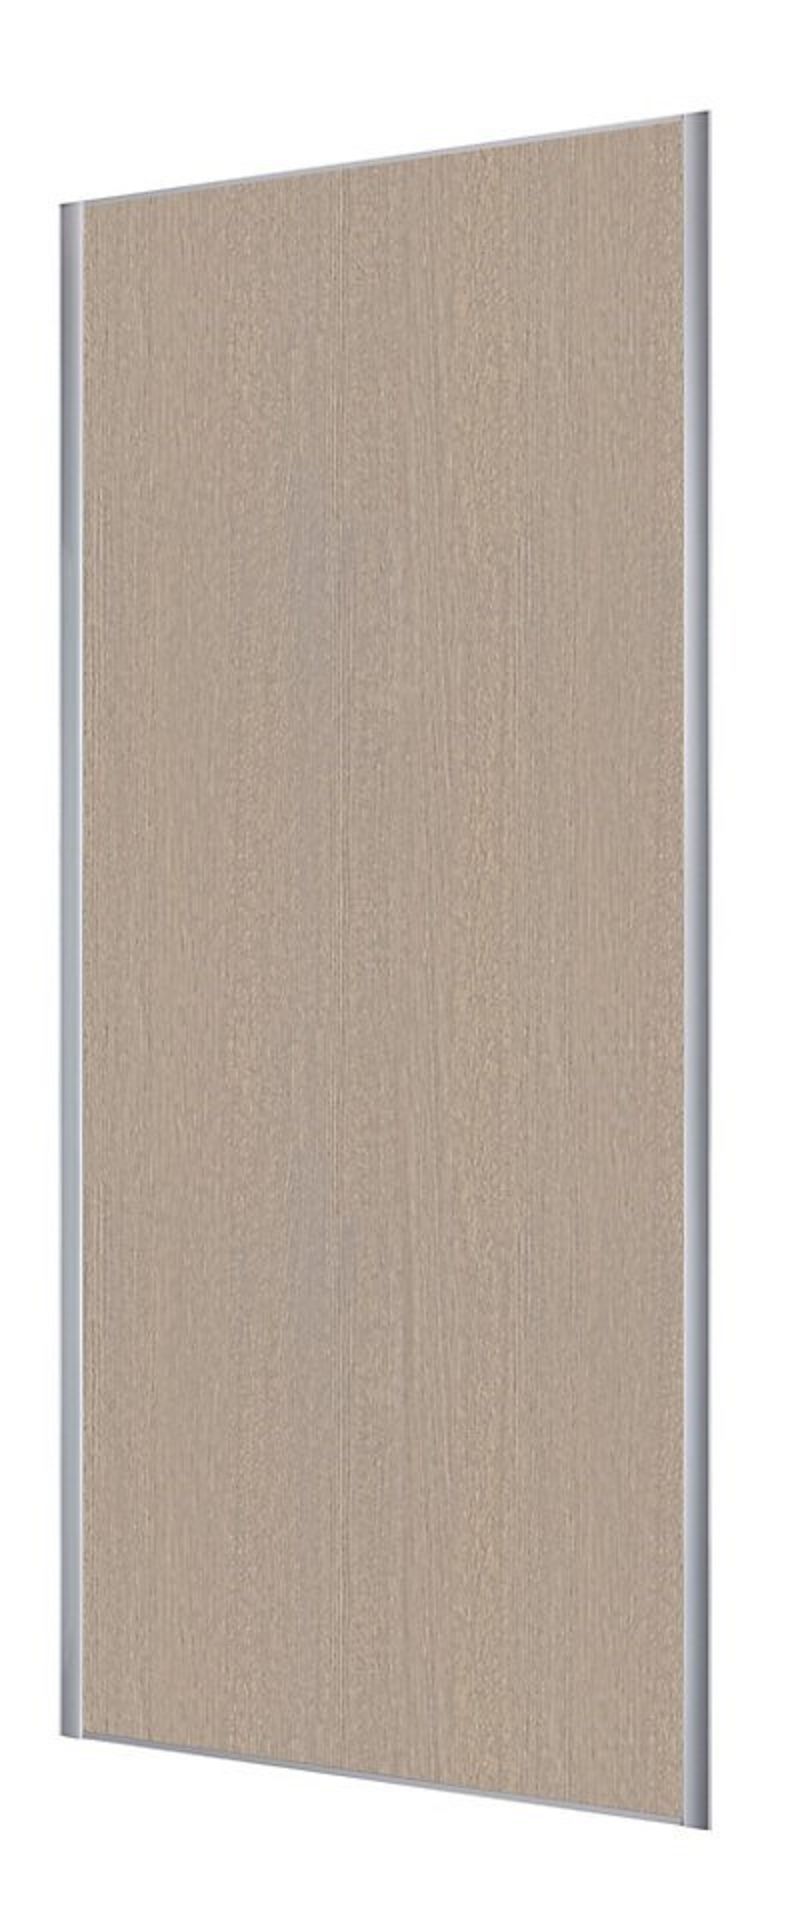 1 x VALLA 1 Sliding Wardrobe Door In Grey Oak With Grey Lacquered Steel Profiles - CL373 - Ref: NC23